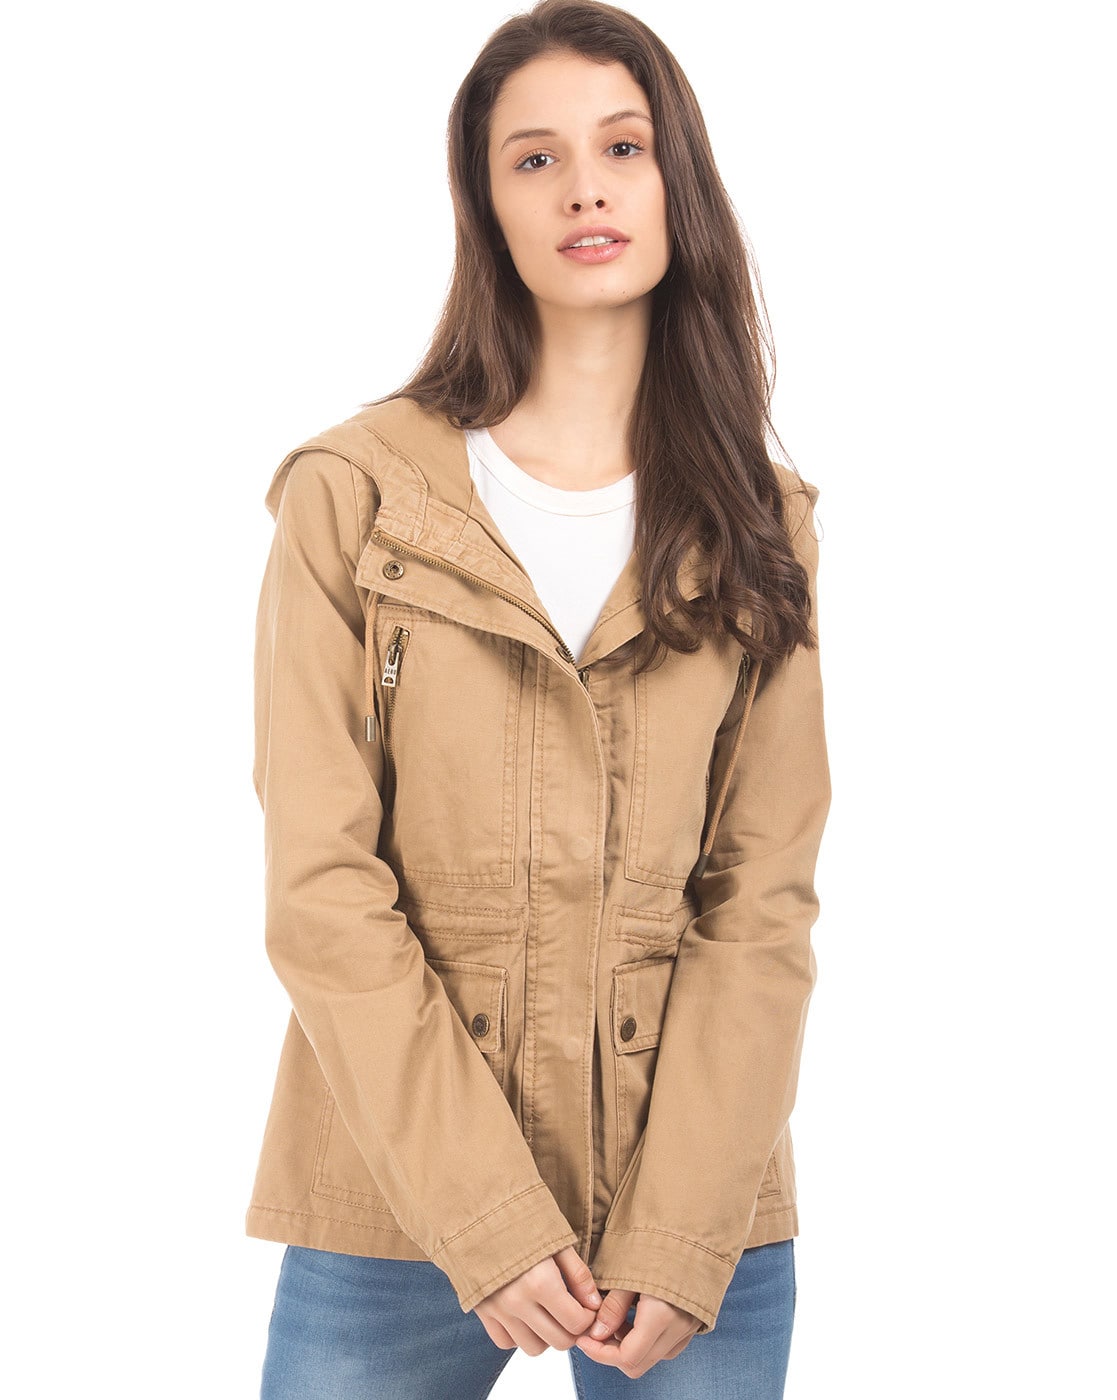 Aeropostale Jacket Womens S Small Orange Full Zip Hooded Pockets  Embroidered | eBay